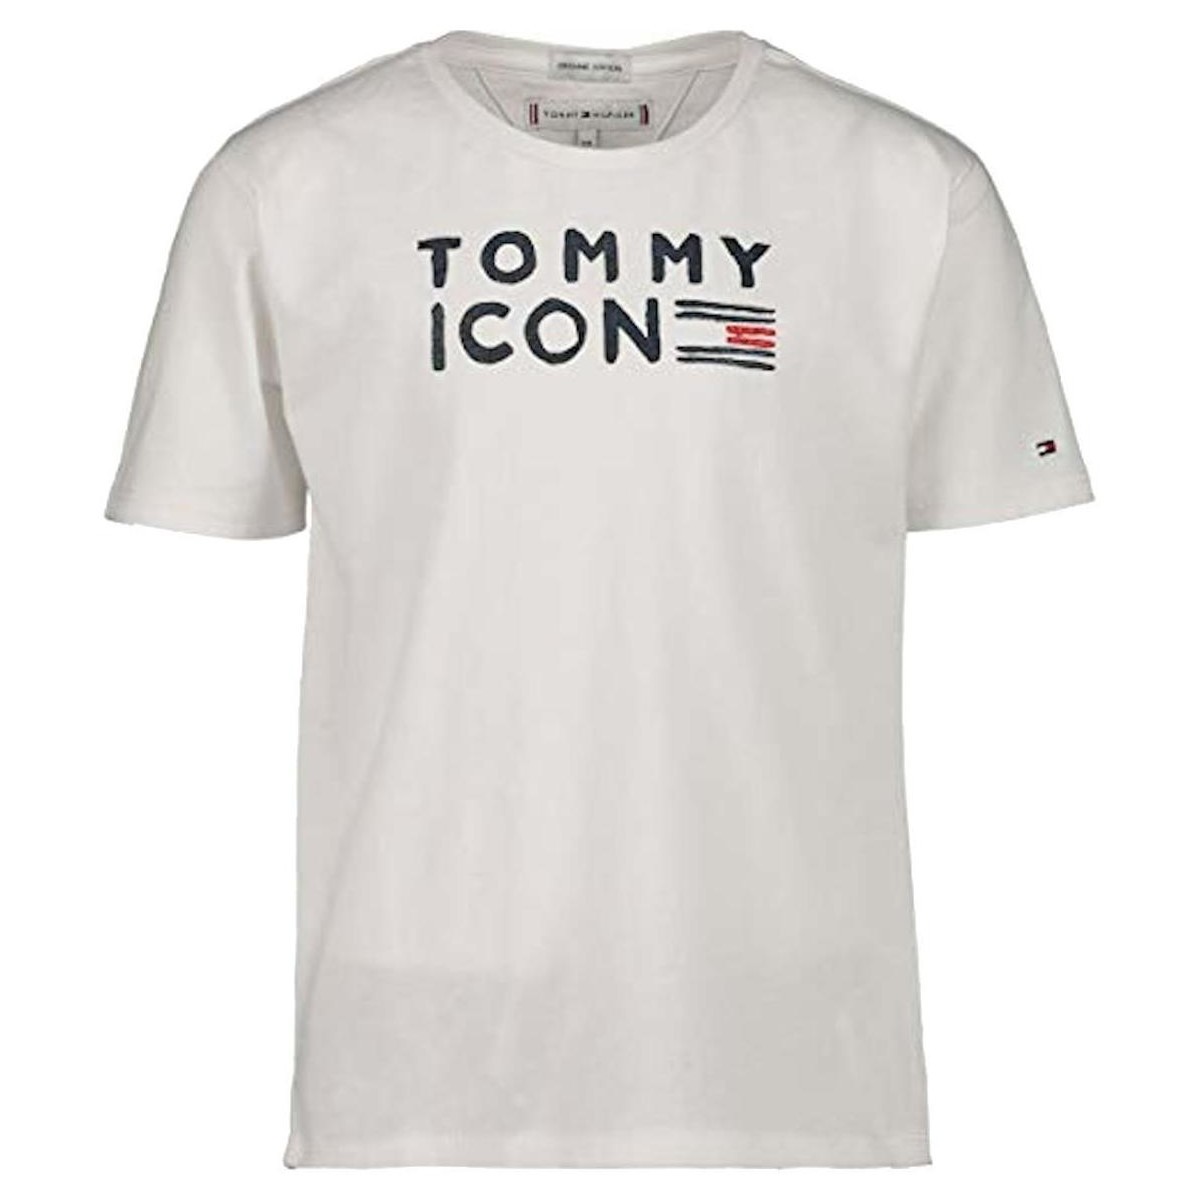 Kleidung Mädchen T-Shirts Tommy Hilfiger  Weiss